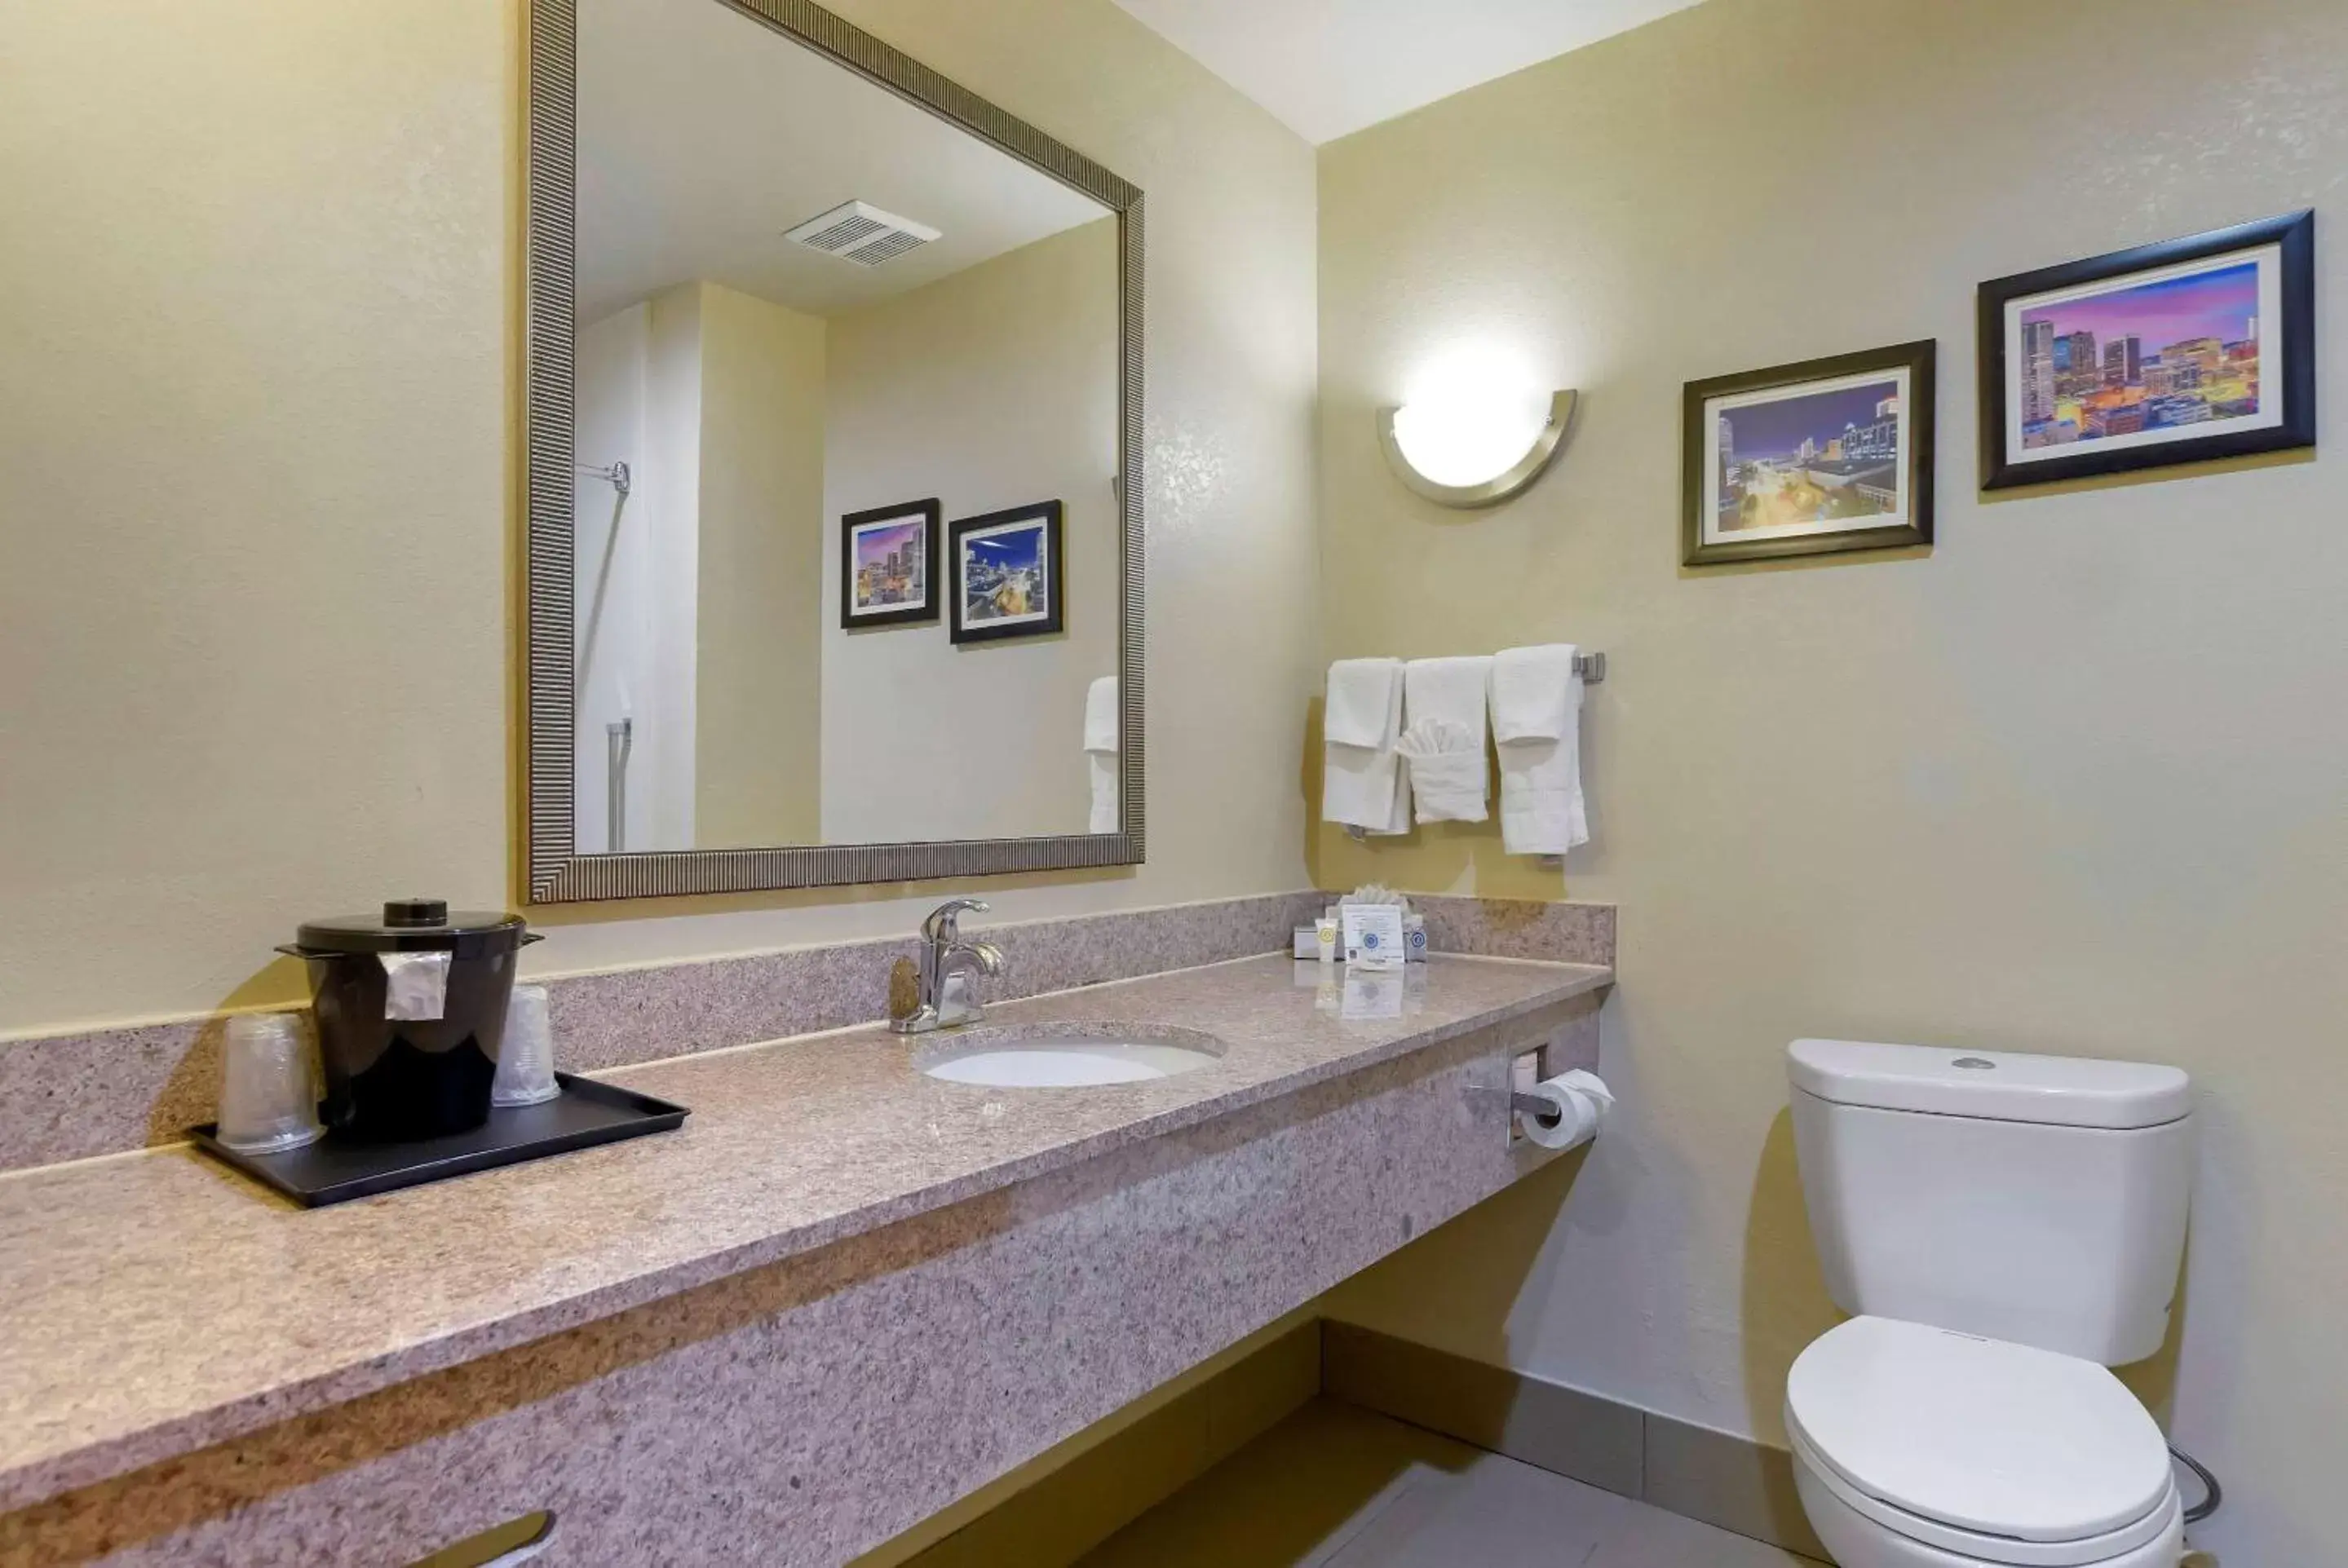 Photo of the whole room, Bathroom in Comfort Suites Fultondale I-65 near I-22